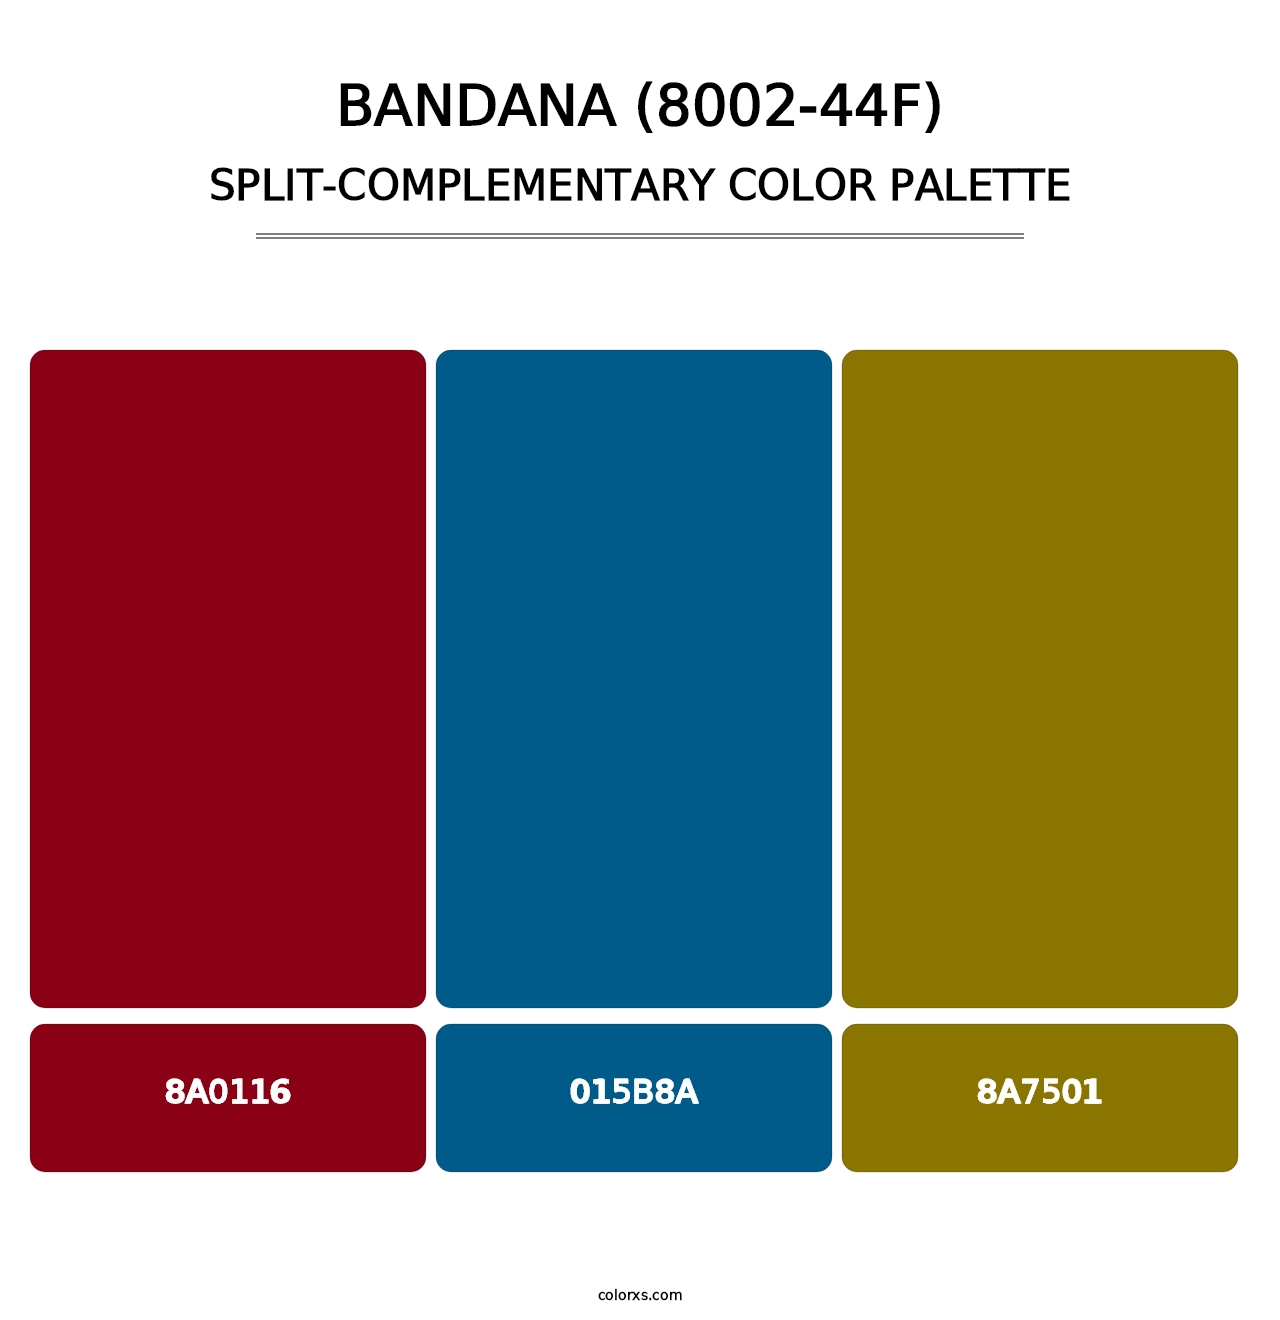 Bandana (8002-44F) - Split-Complementary Color Palette